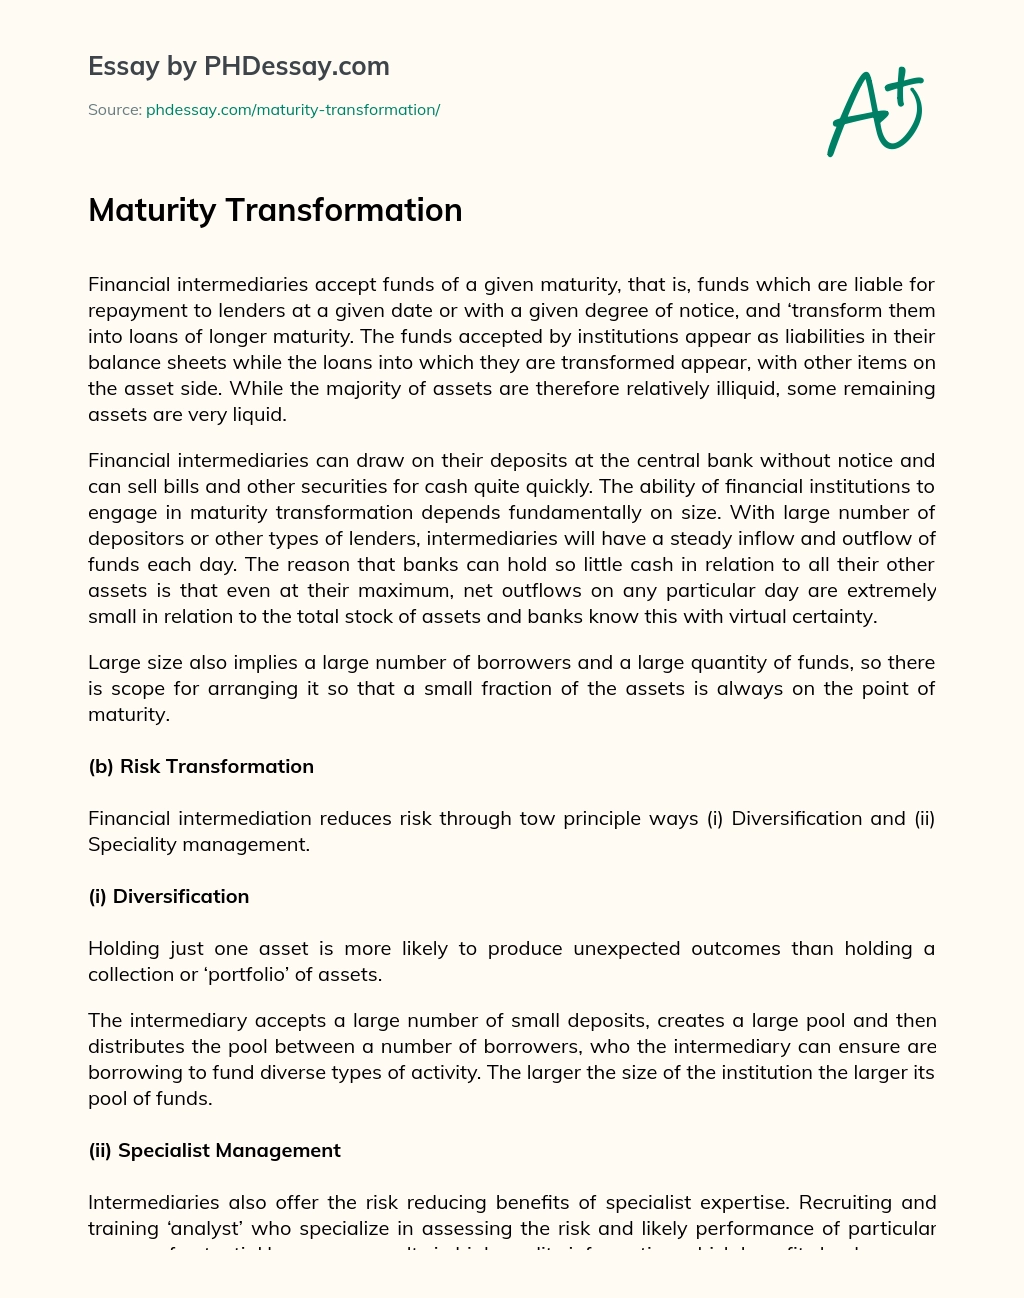 Maturity Transformation essay